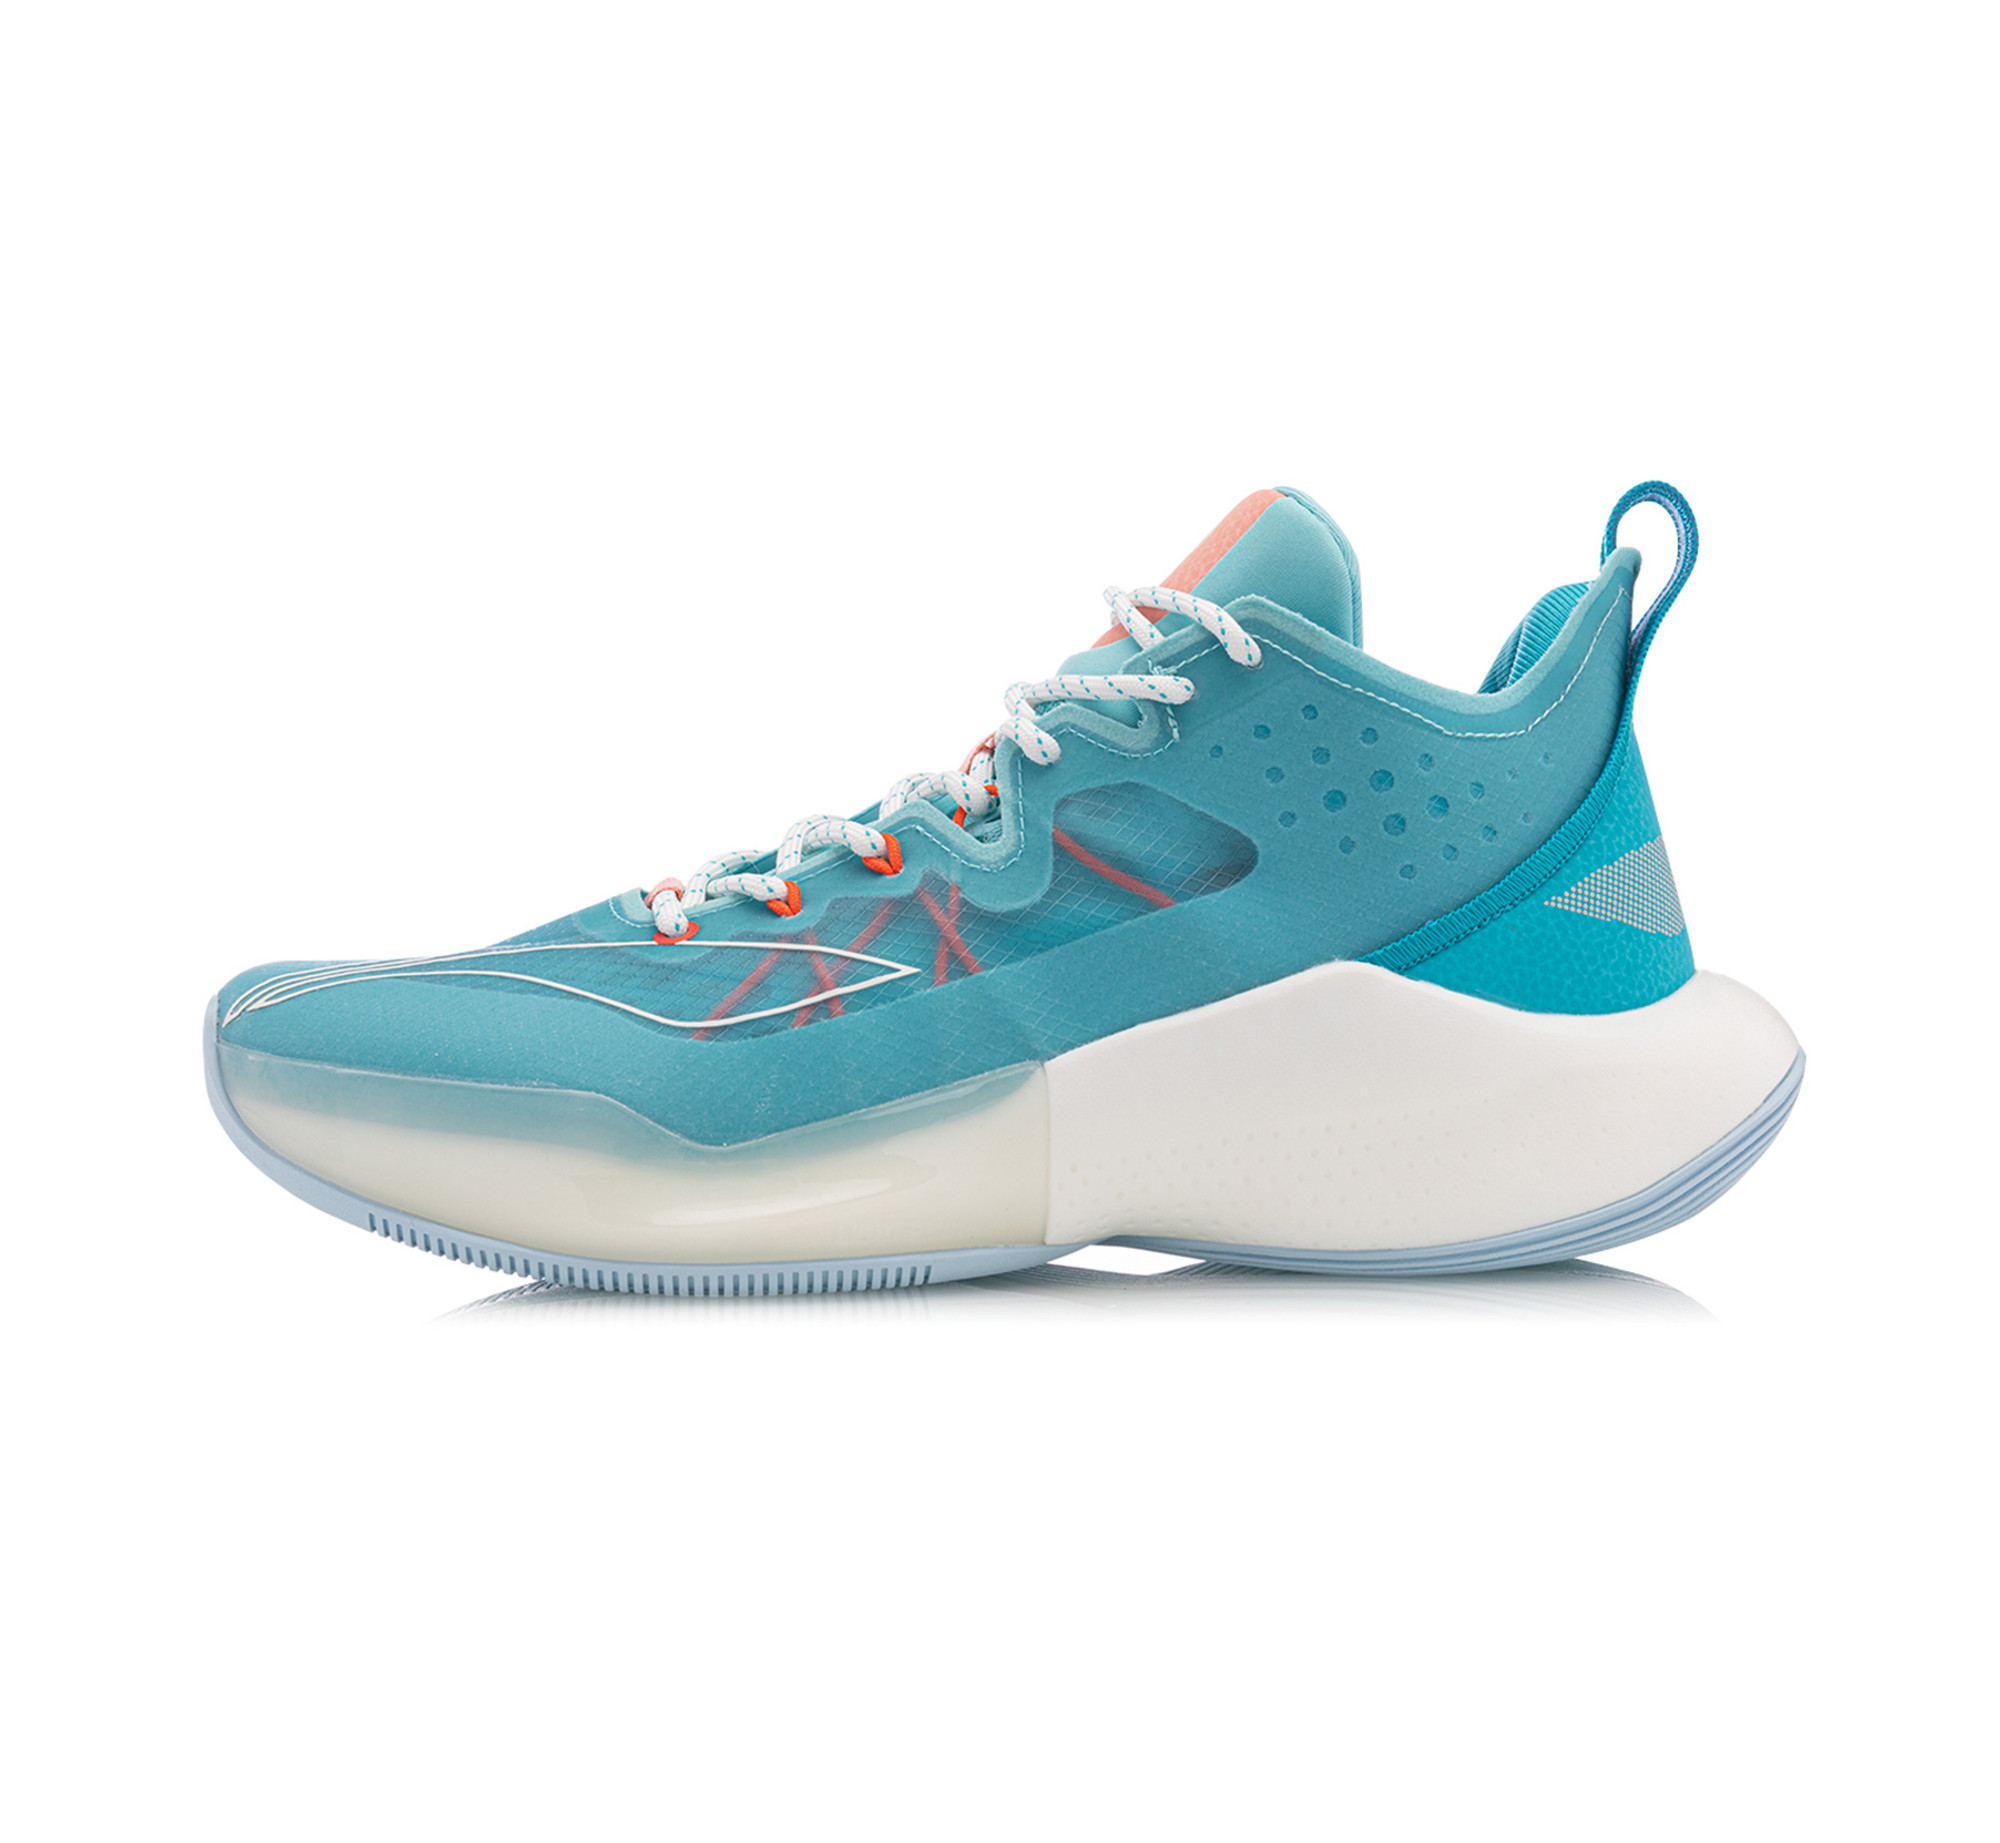 Li-Ning Sonic VIII Low Basketball Shoe | Shop online now at Sunlight ...